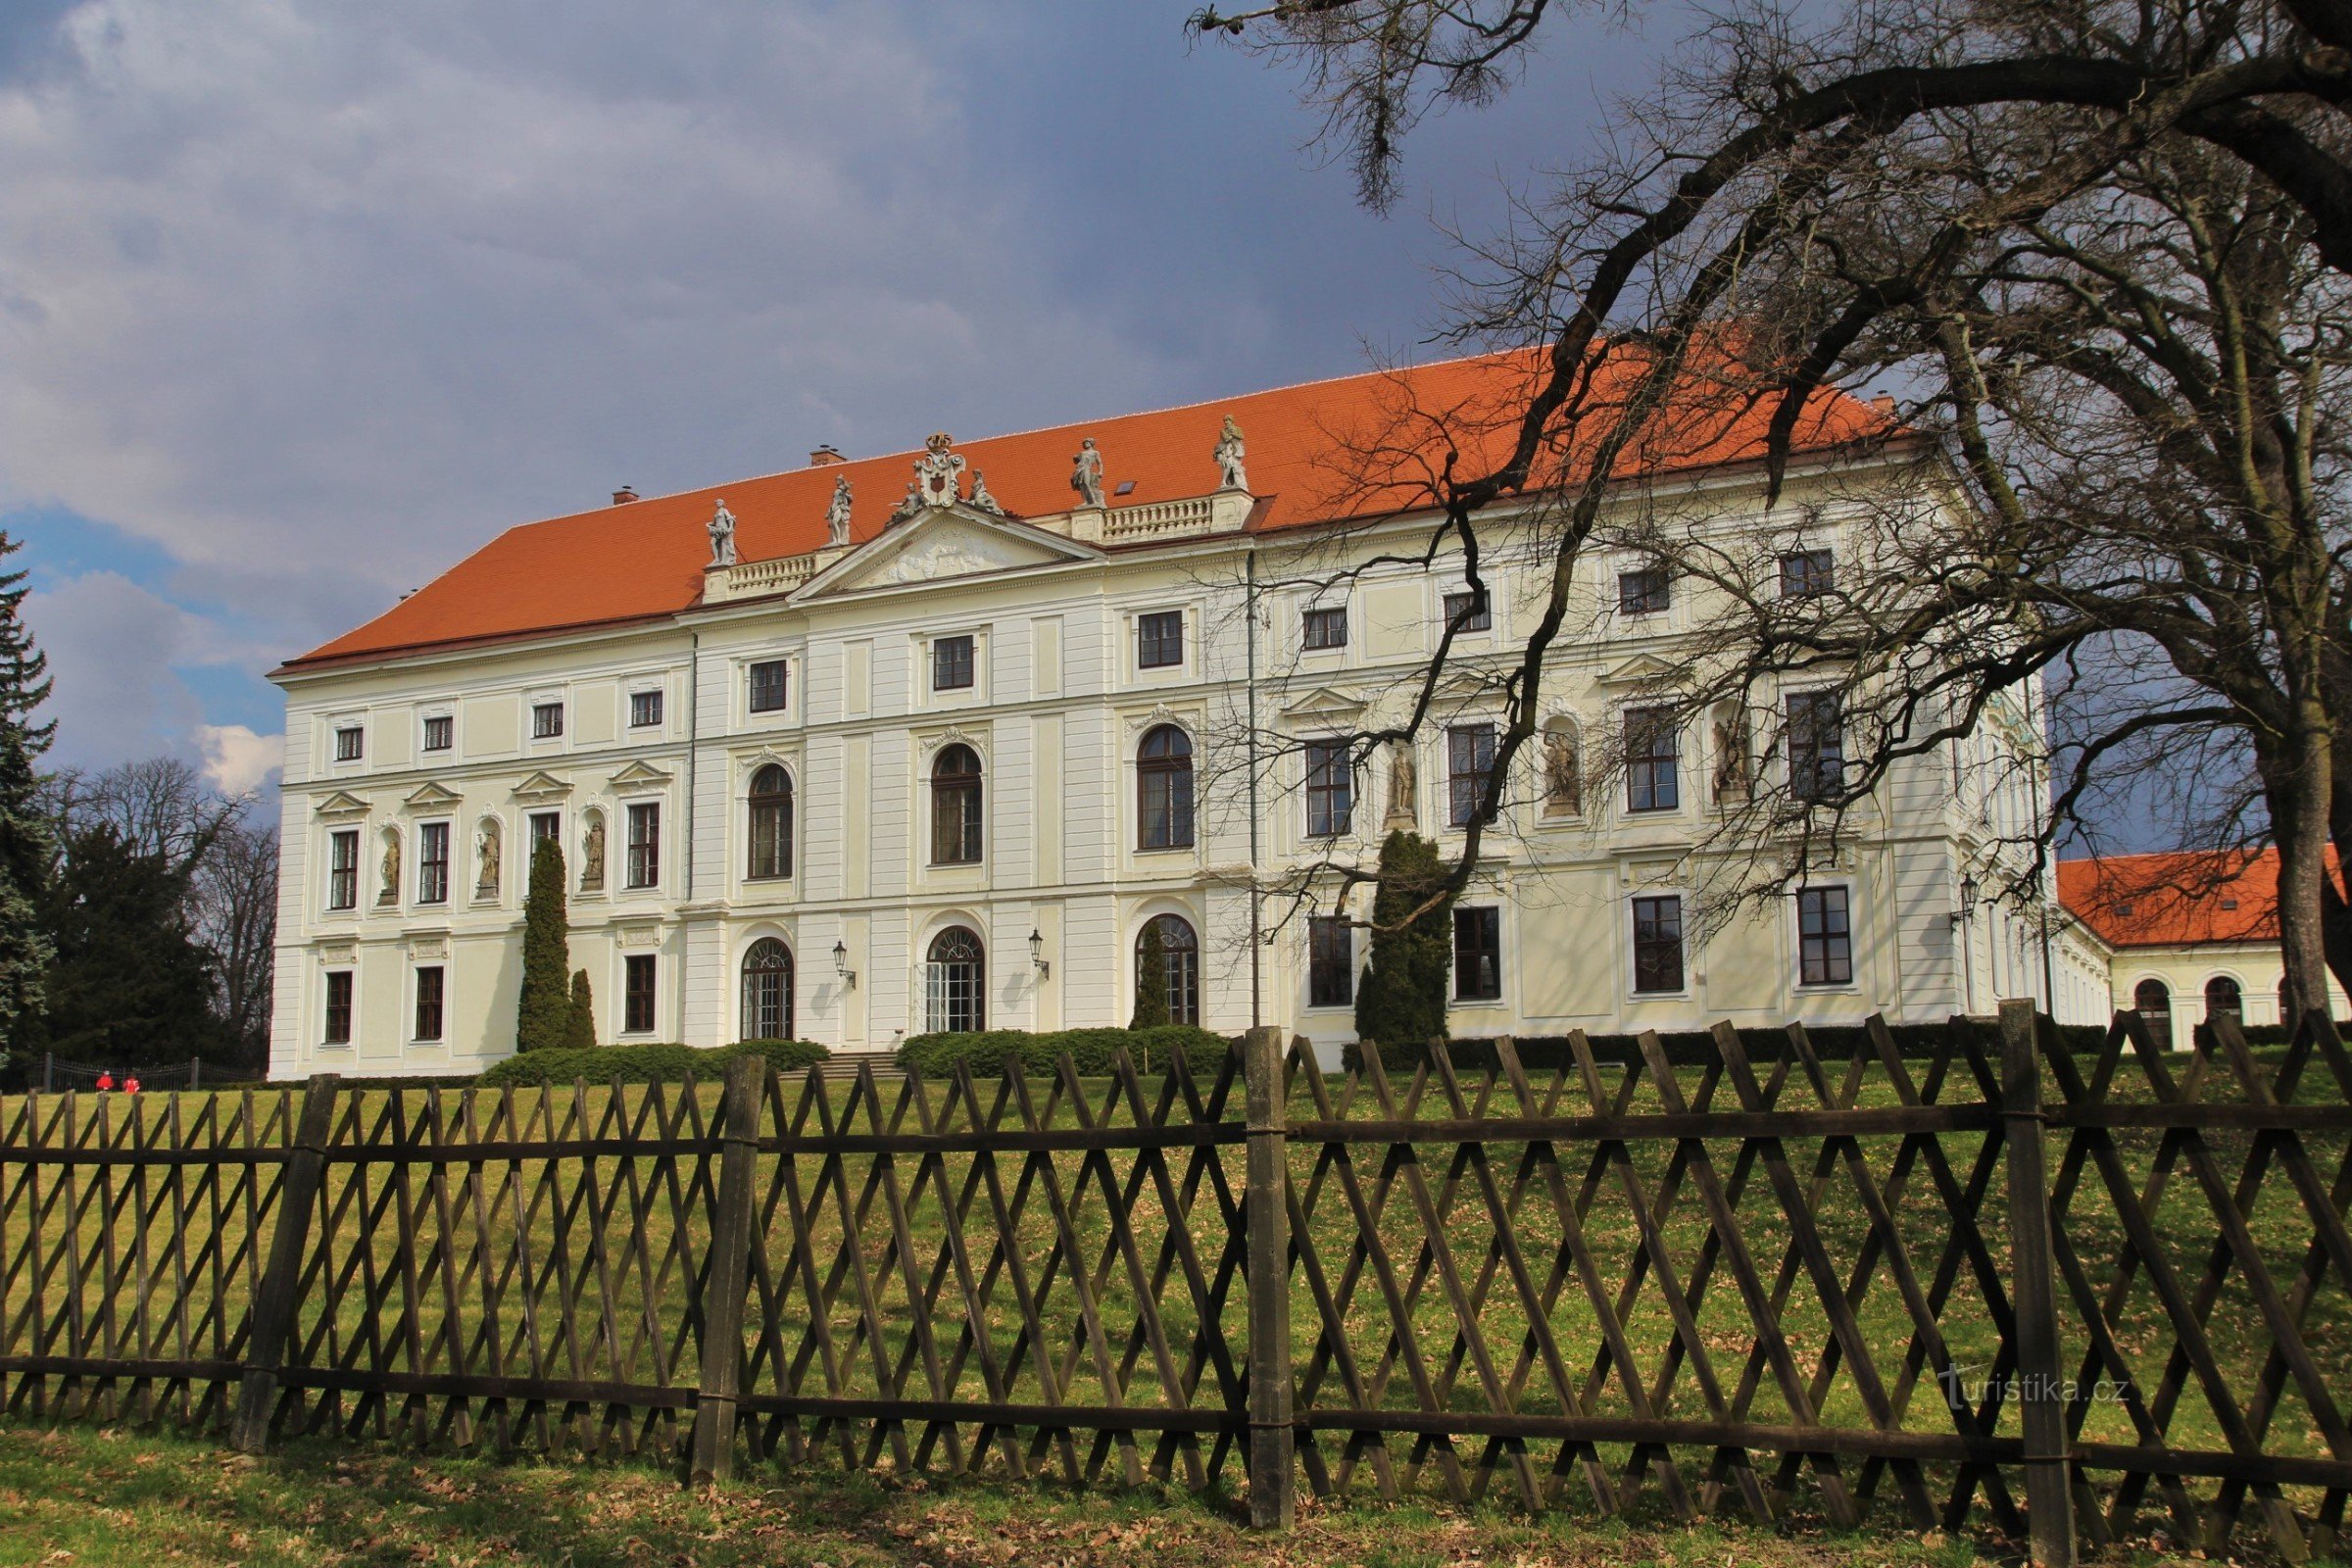 Židlochovice - lâu đài 2016